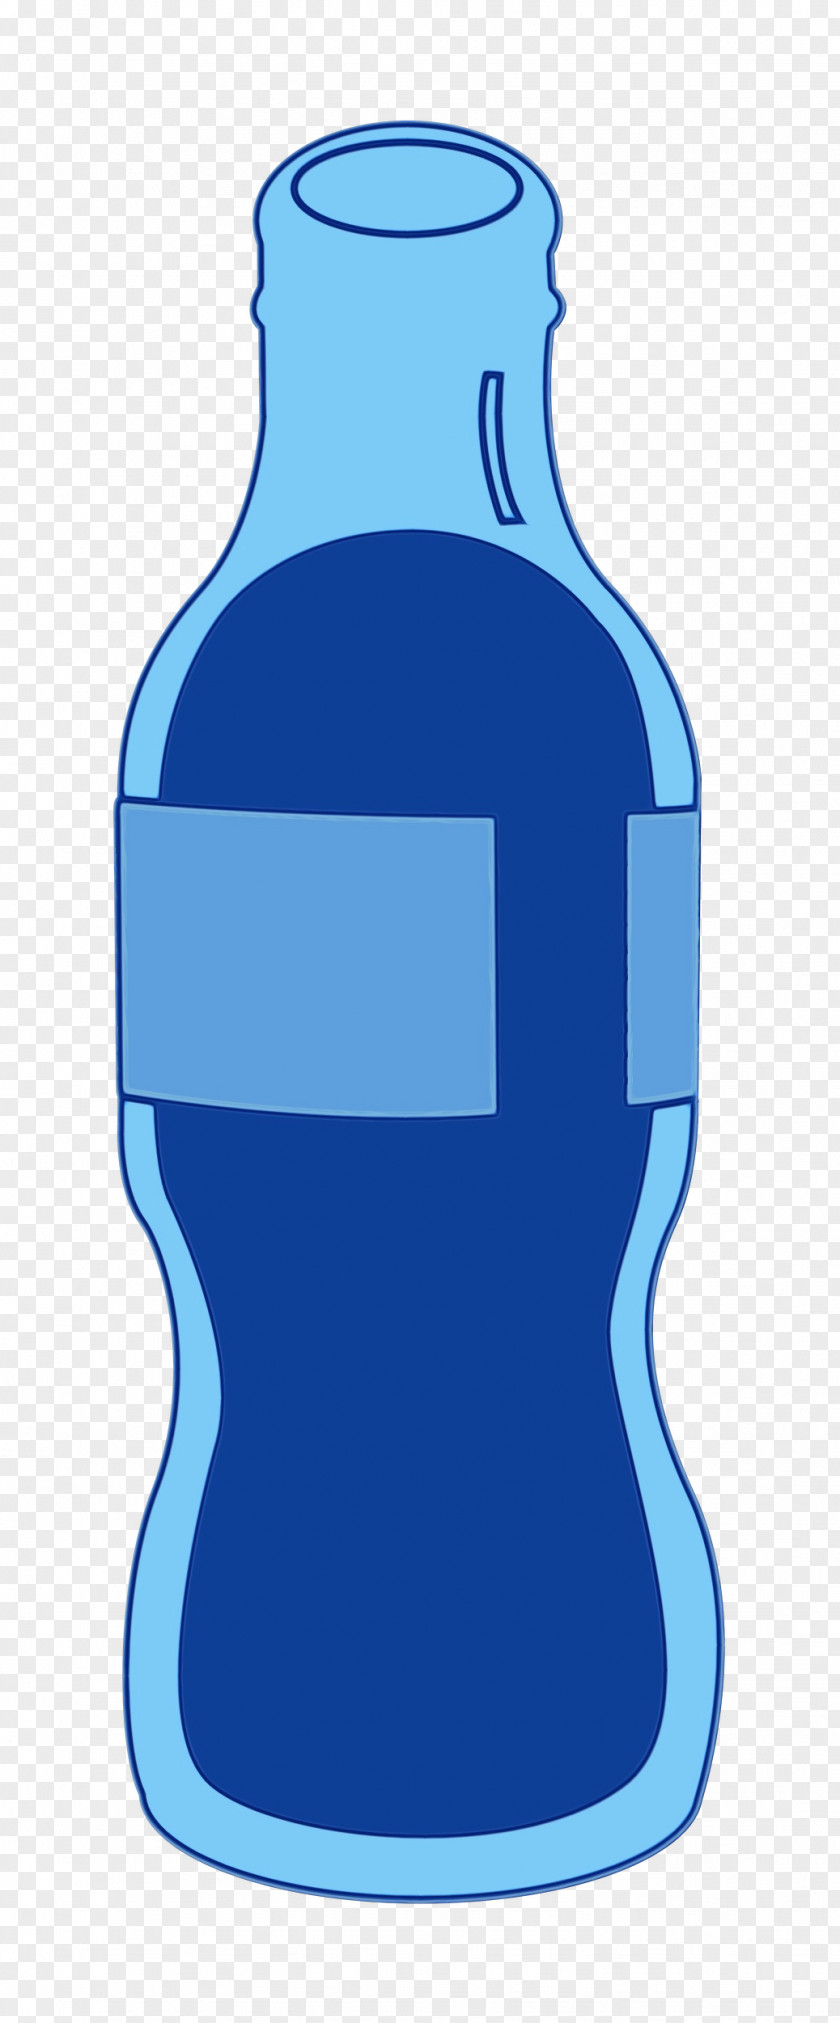 Glass Bottle Bottle Water Bottle Cobalt Blue Glass PNG